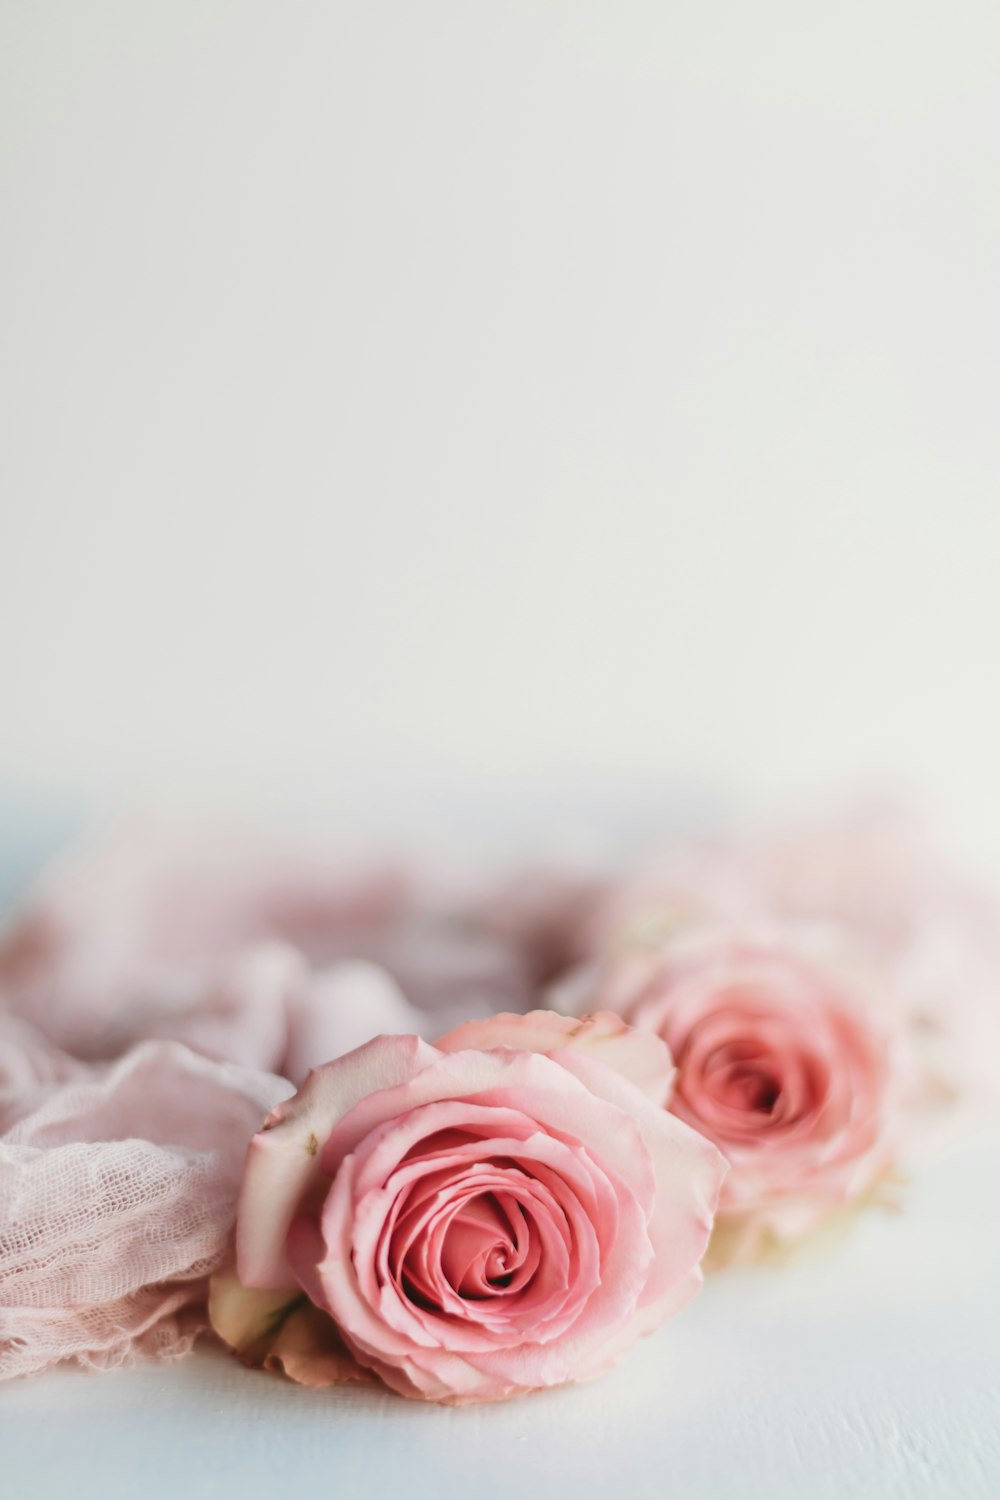 pink rose on white textile photo – Free Flower Image on Unsplash